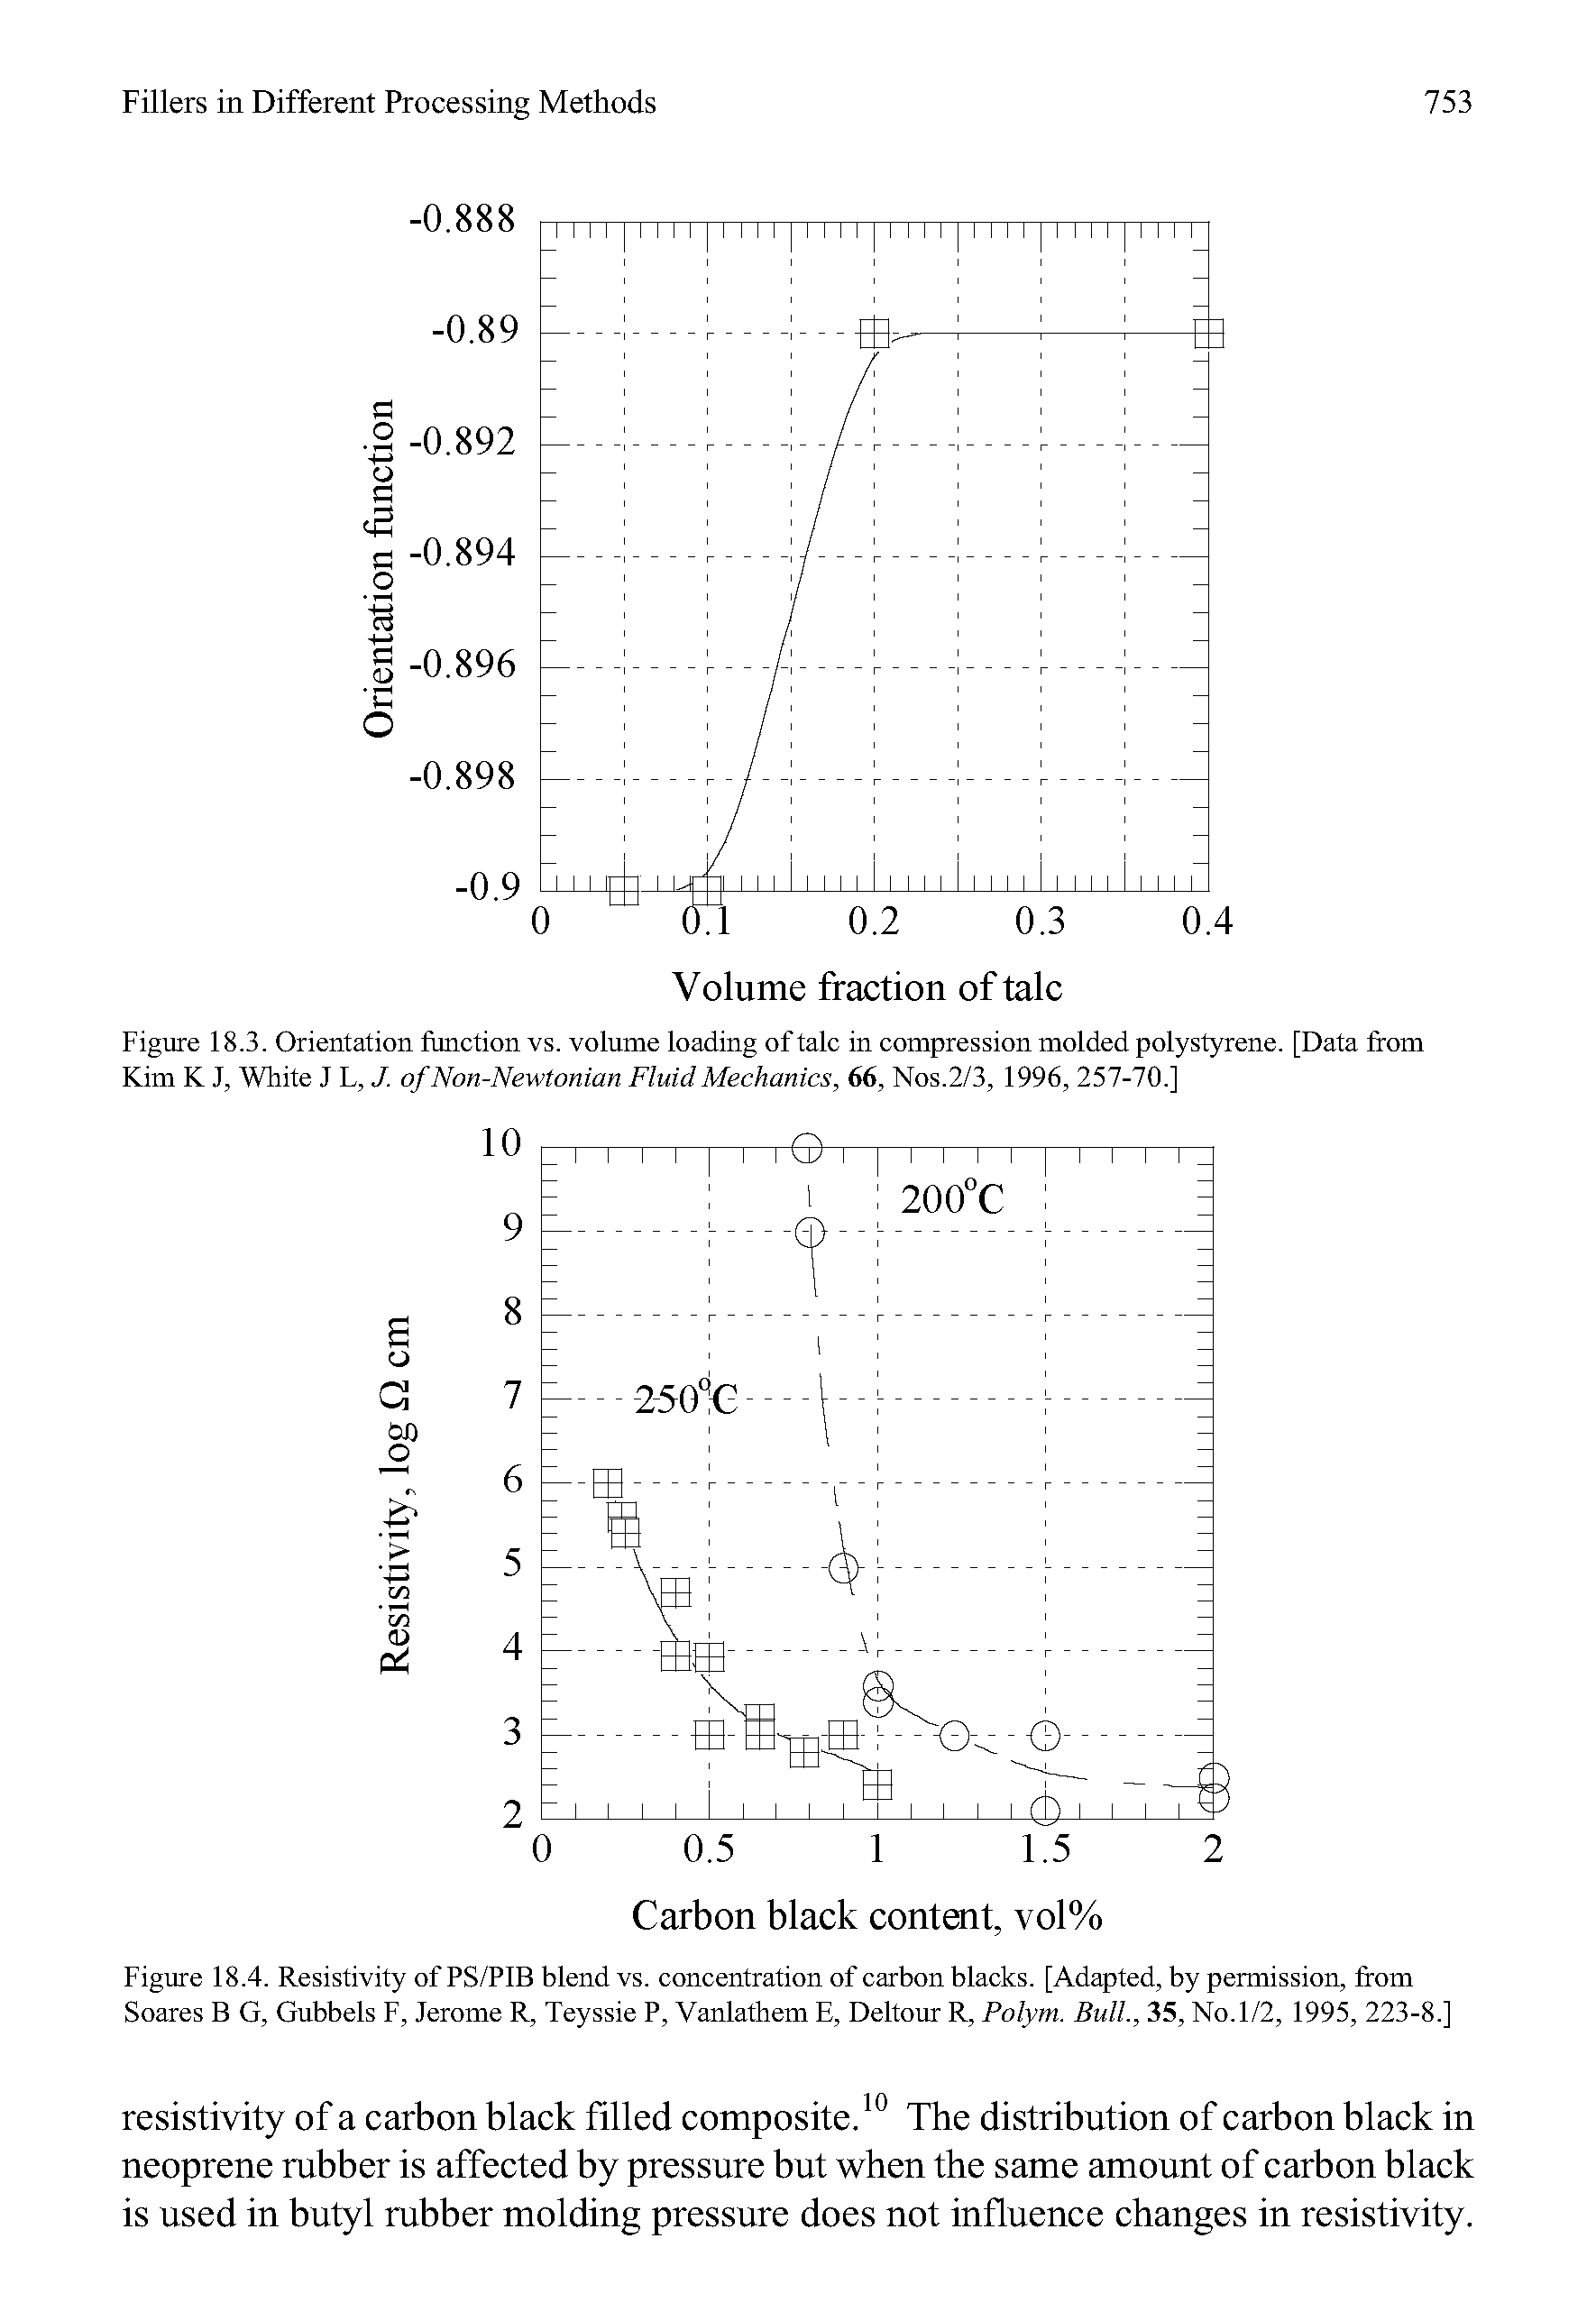 Figure 18.3. Orientation function vs. volume loading of talc in compression molded polystyrene. [Data from Kim K J, White J L. J. of Non-Newtonian Fluid Mechanics, 66, Nos.2/3, 1996, 257-70.]...